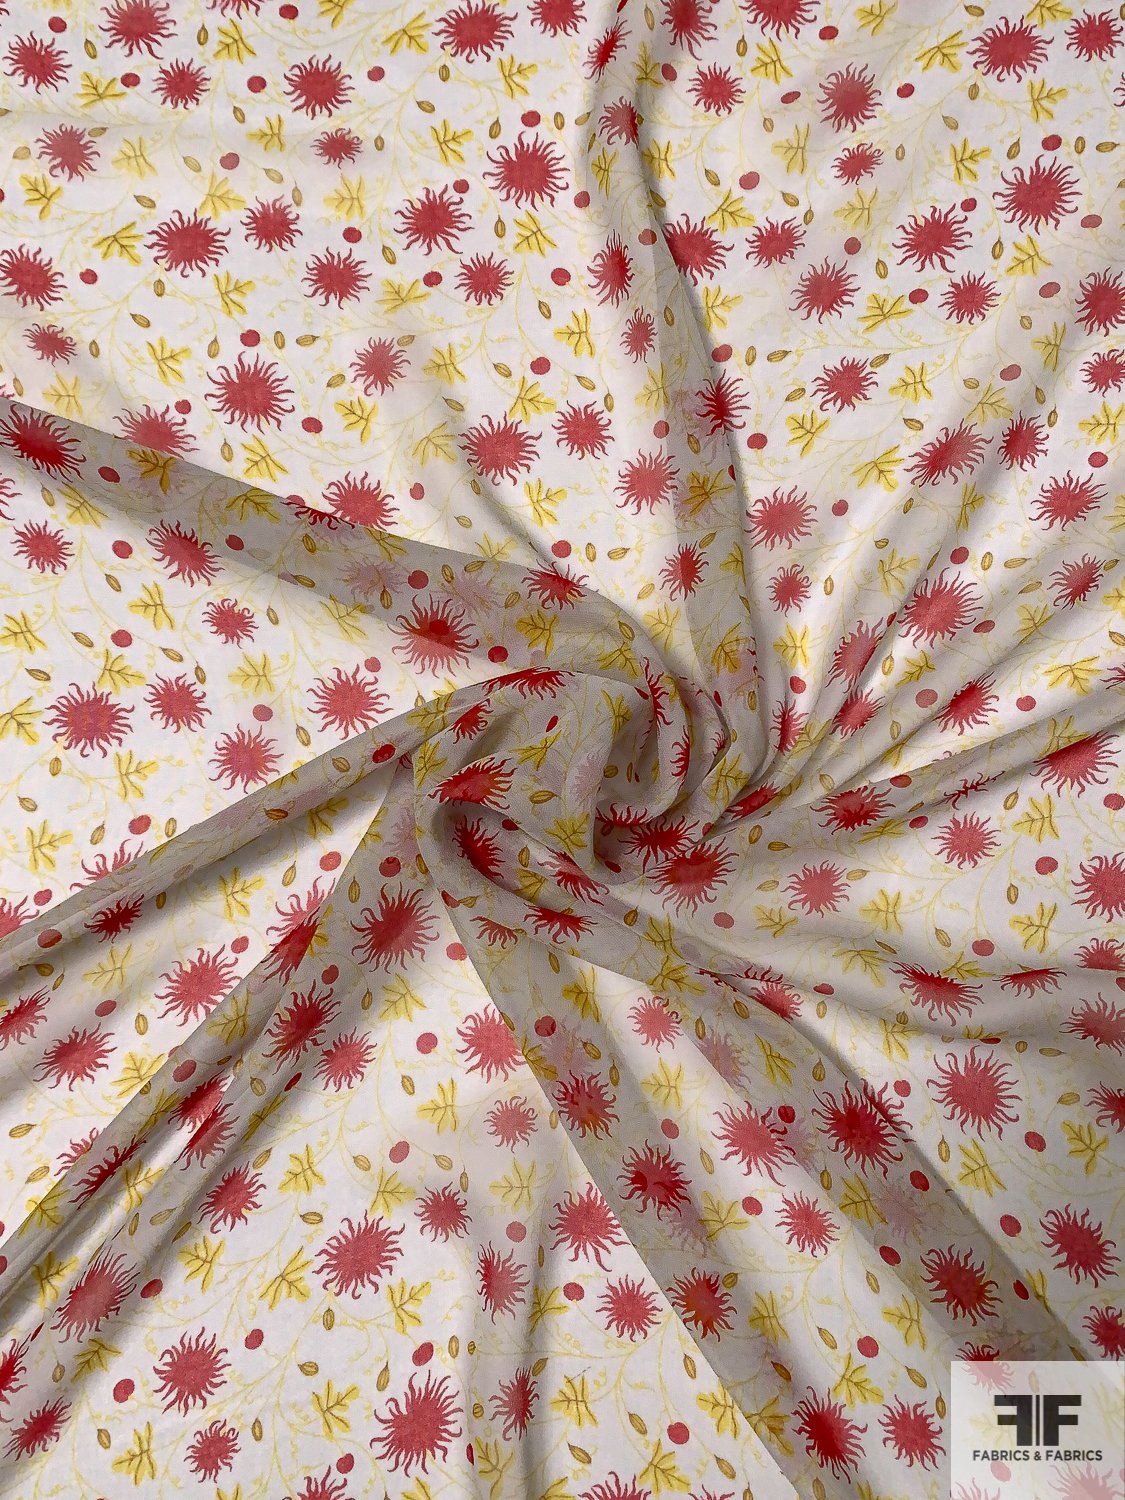 Flaming Sun and Leaf Printed Silk Chiffon - Red / Yellow / Grey